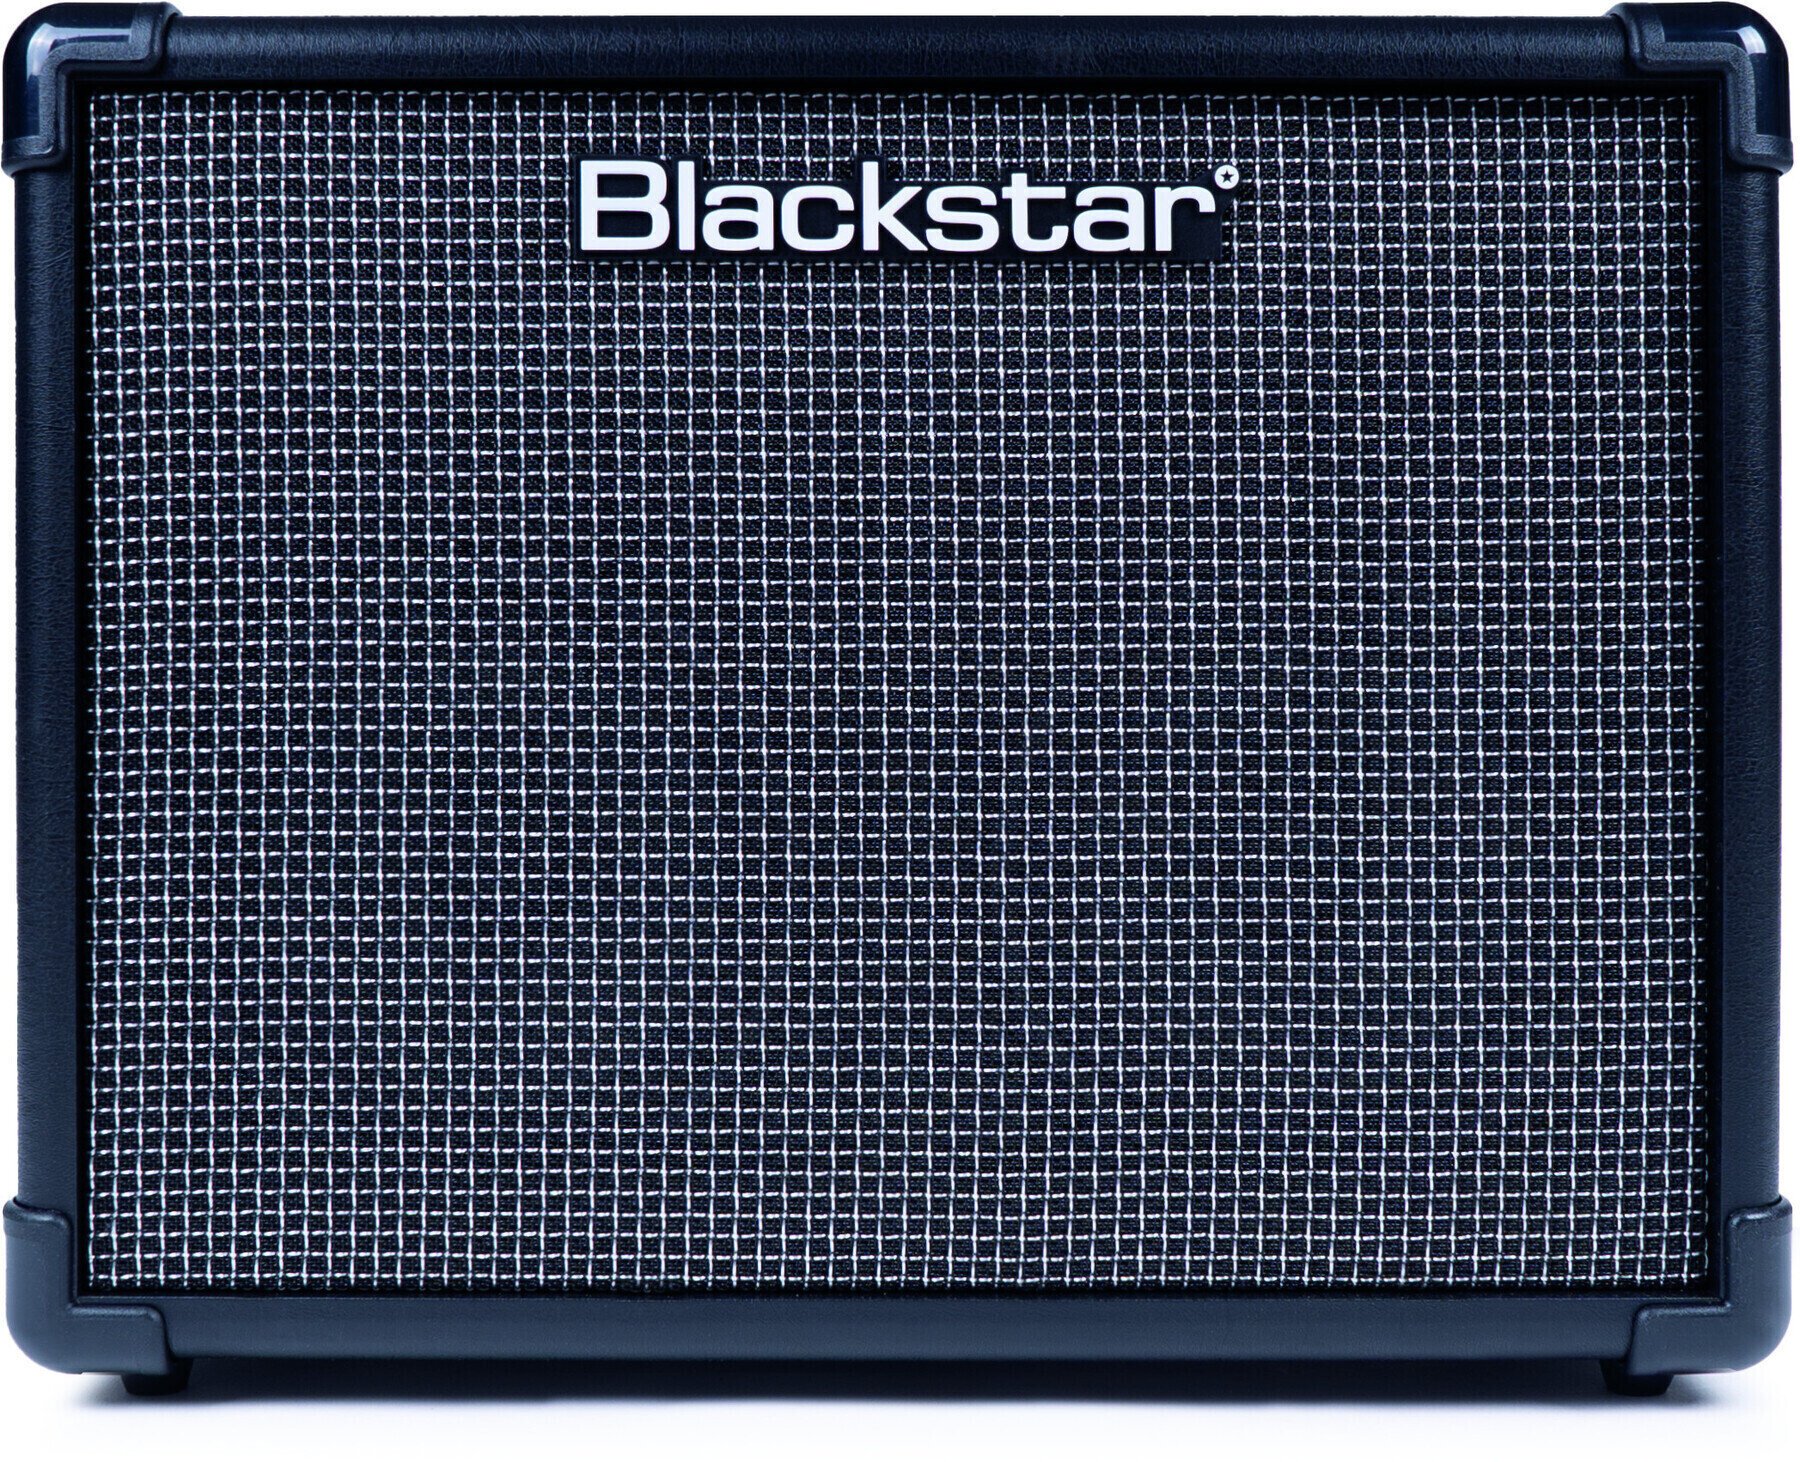 Modelling Gitarrencombo Blackstar ID:Core20 V3